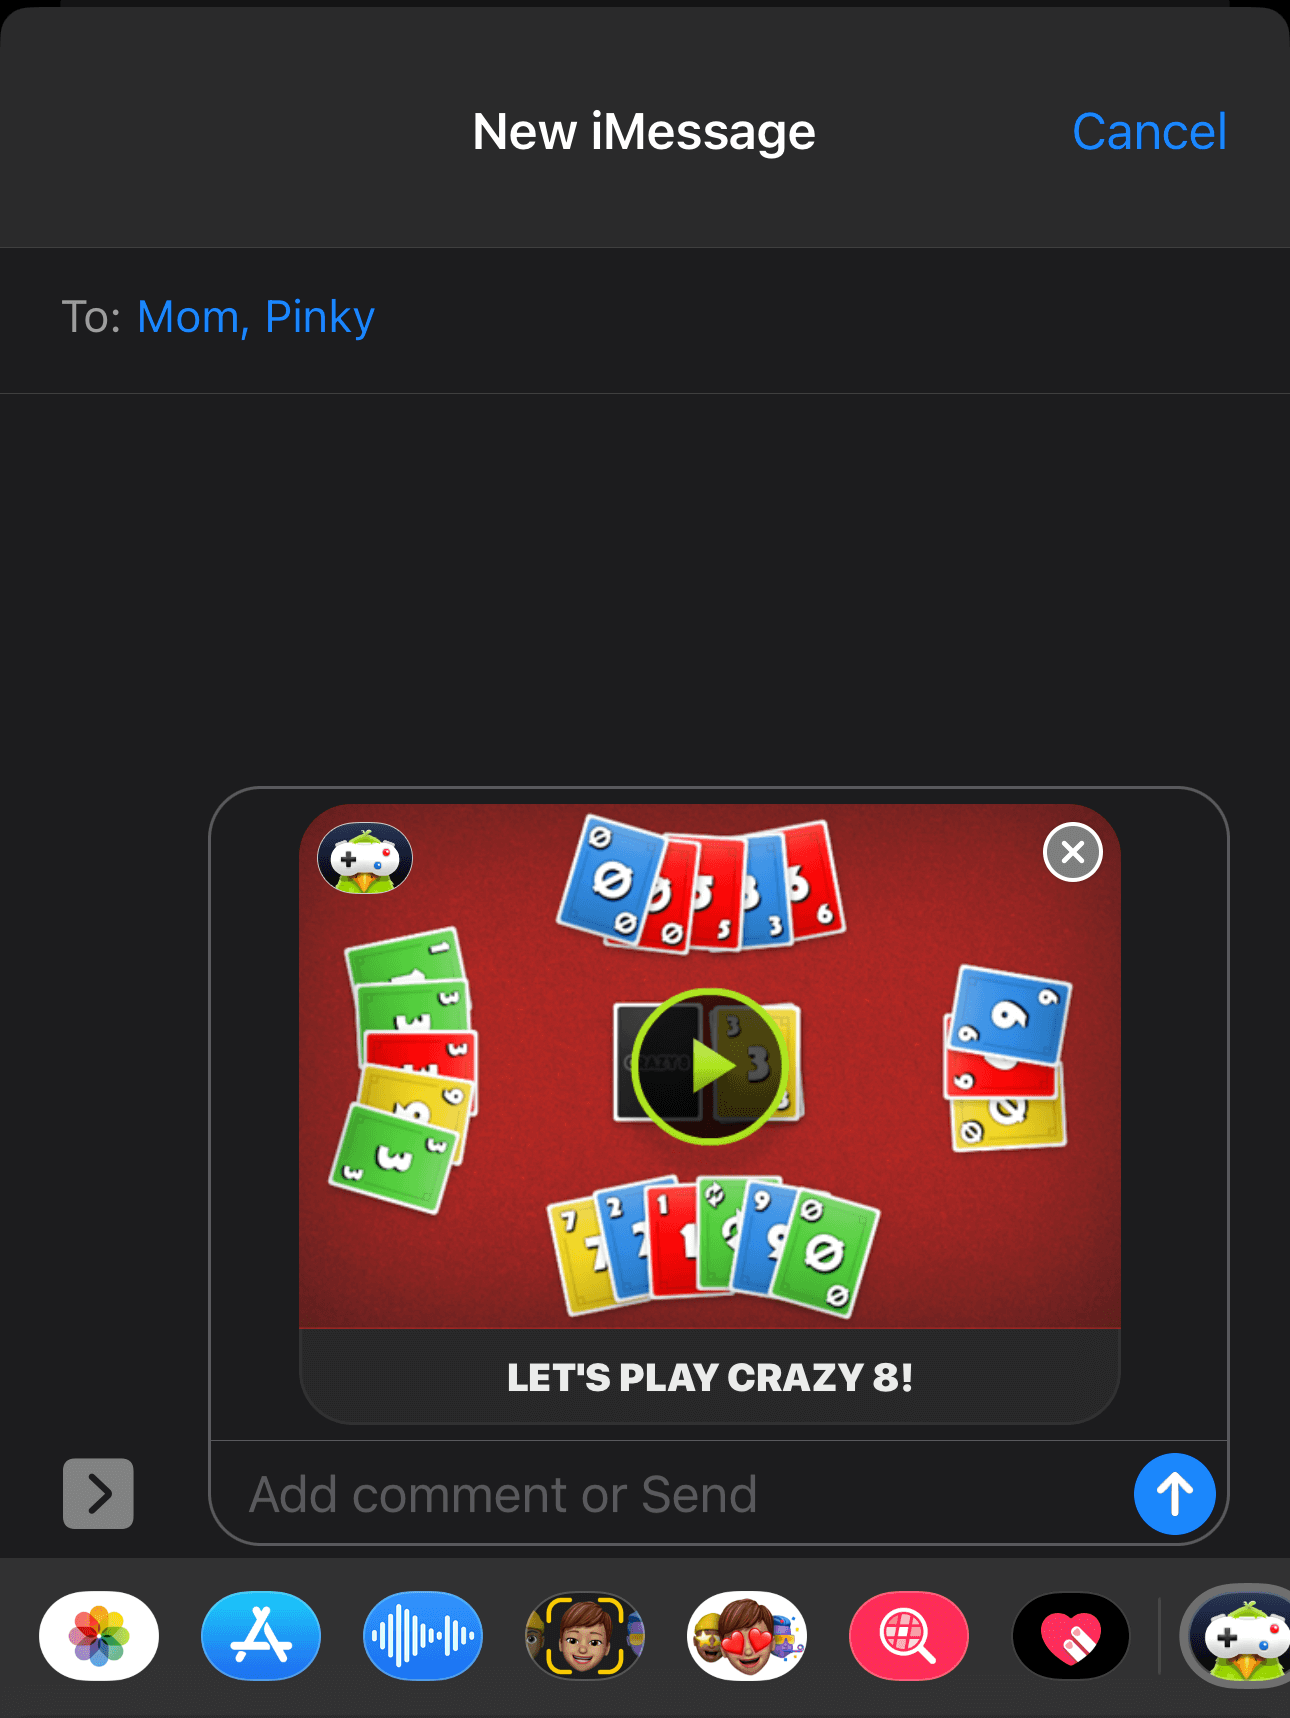 Send Crazy 8 game invite to your friends